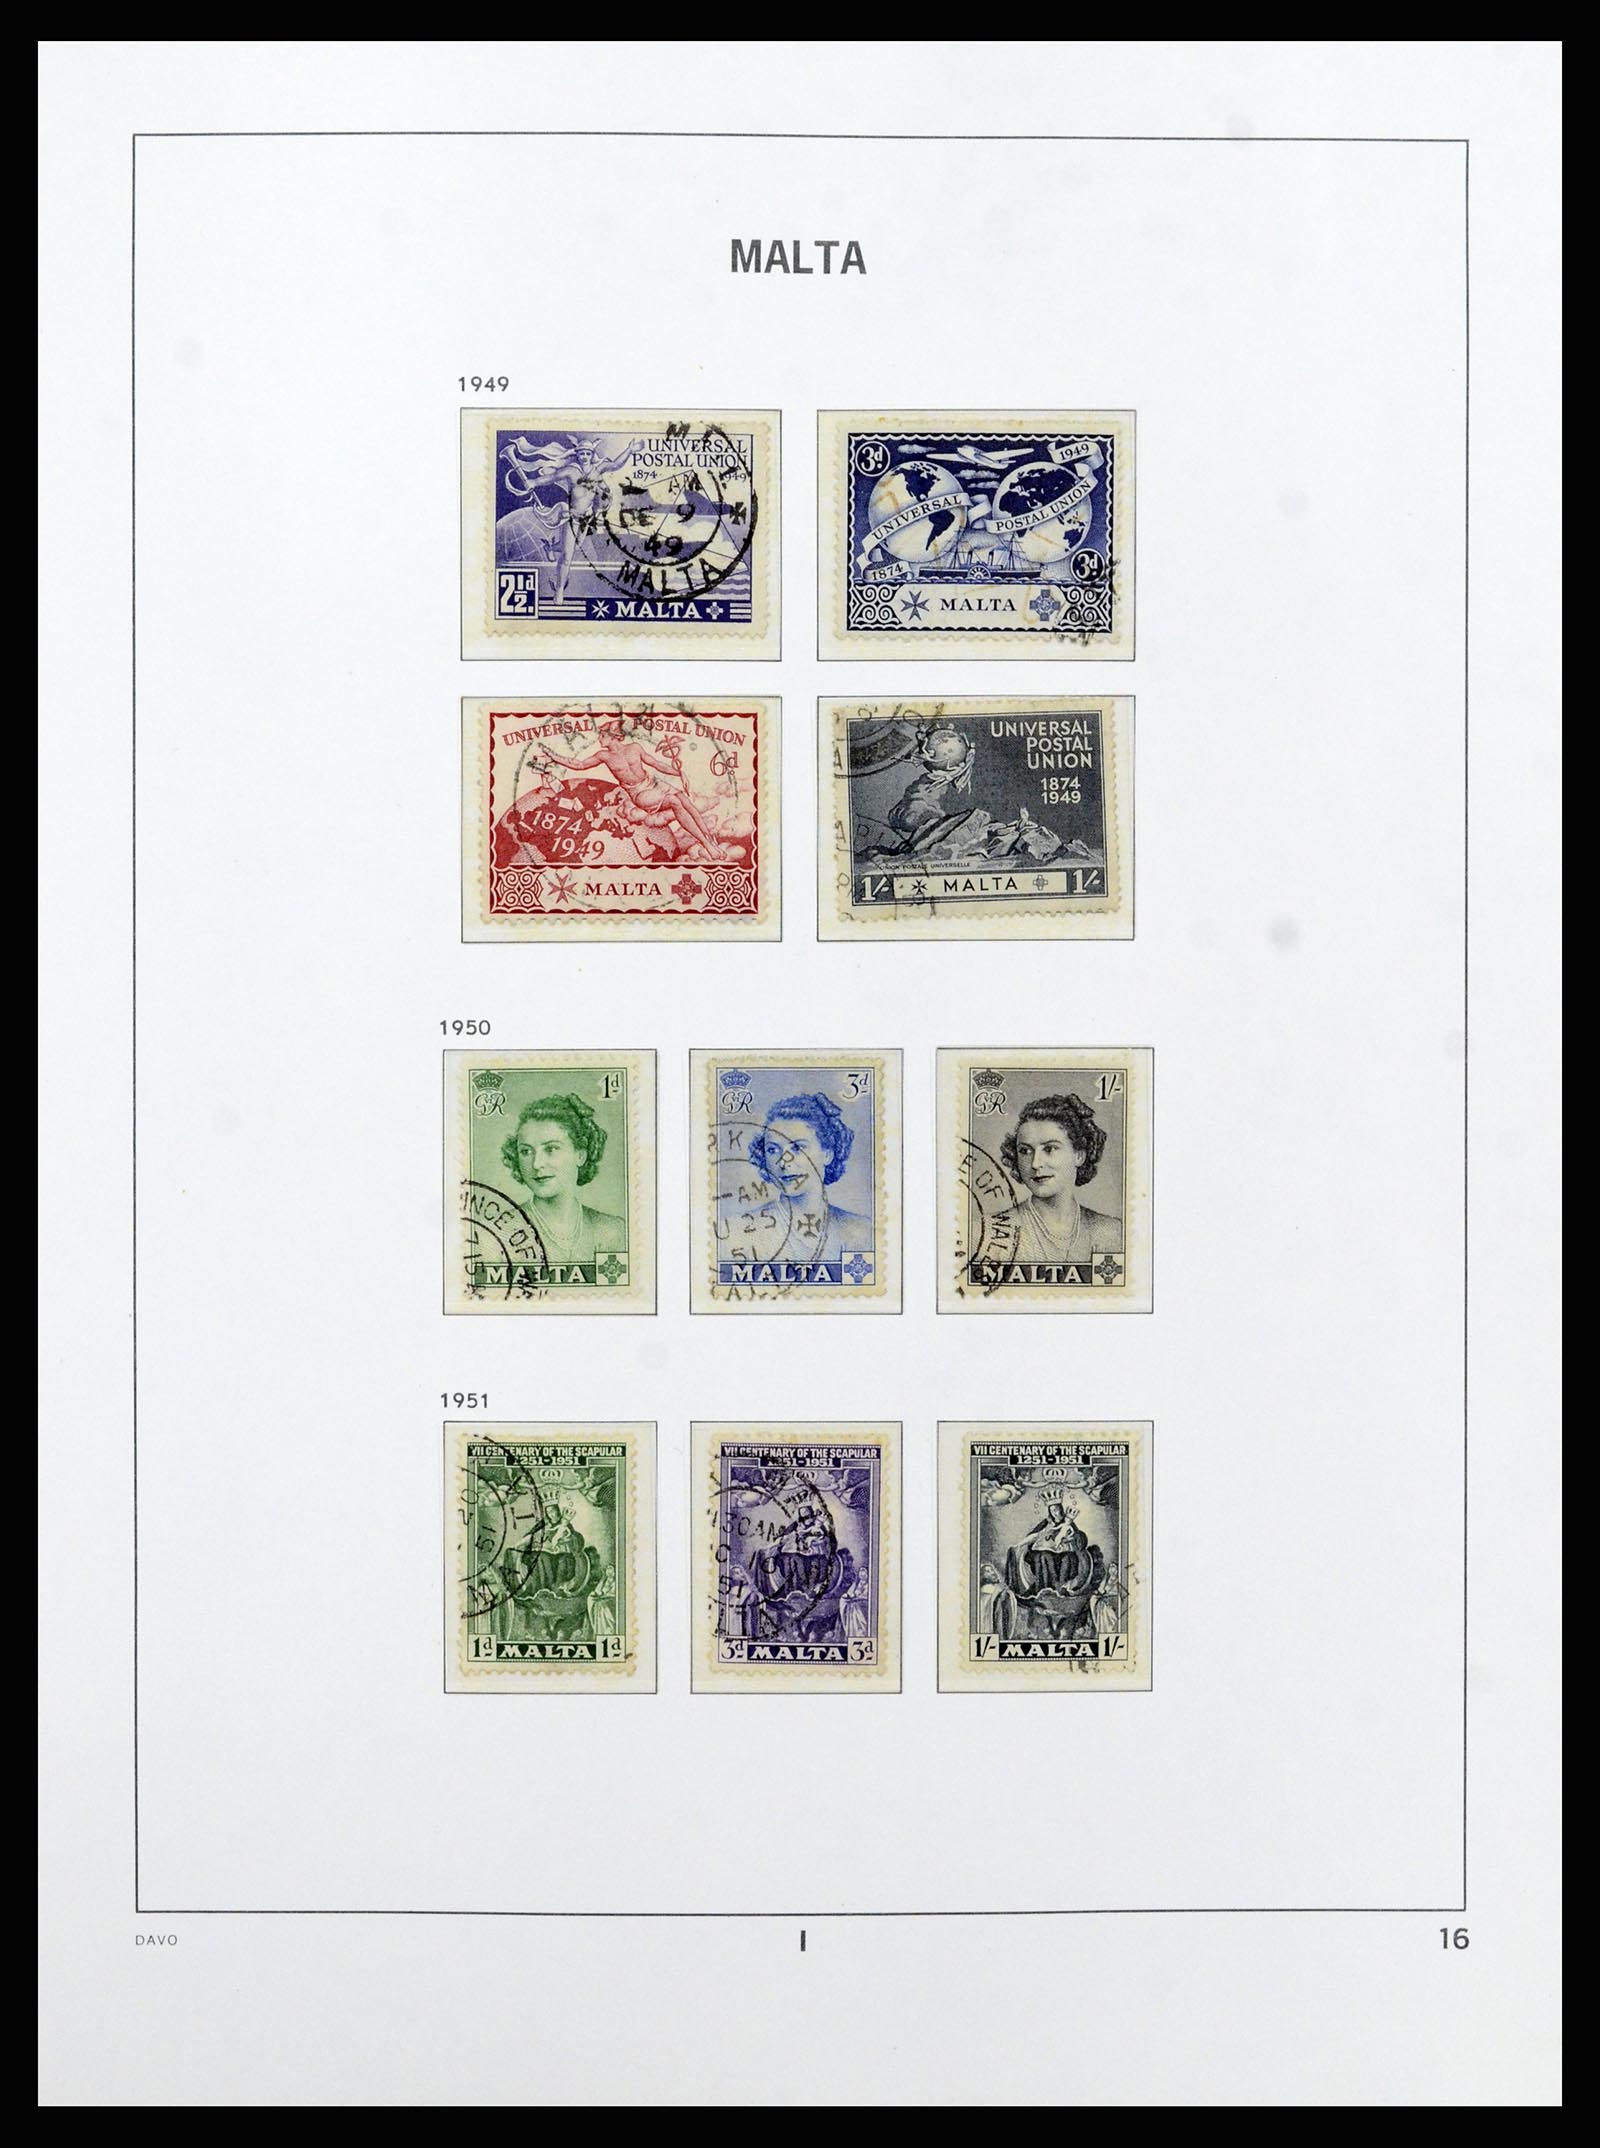 37212 016 - Stamp collection 37212 Malta 1863-1989.